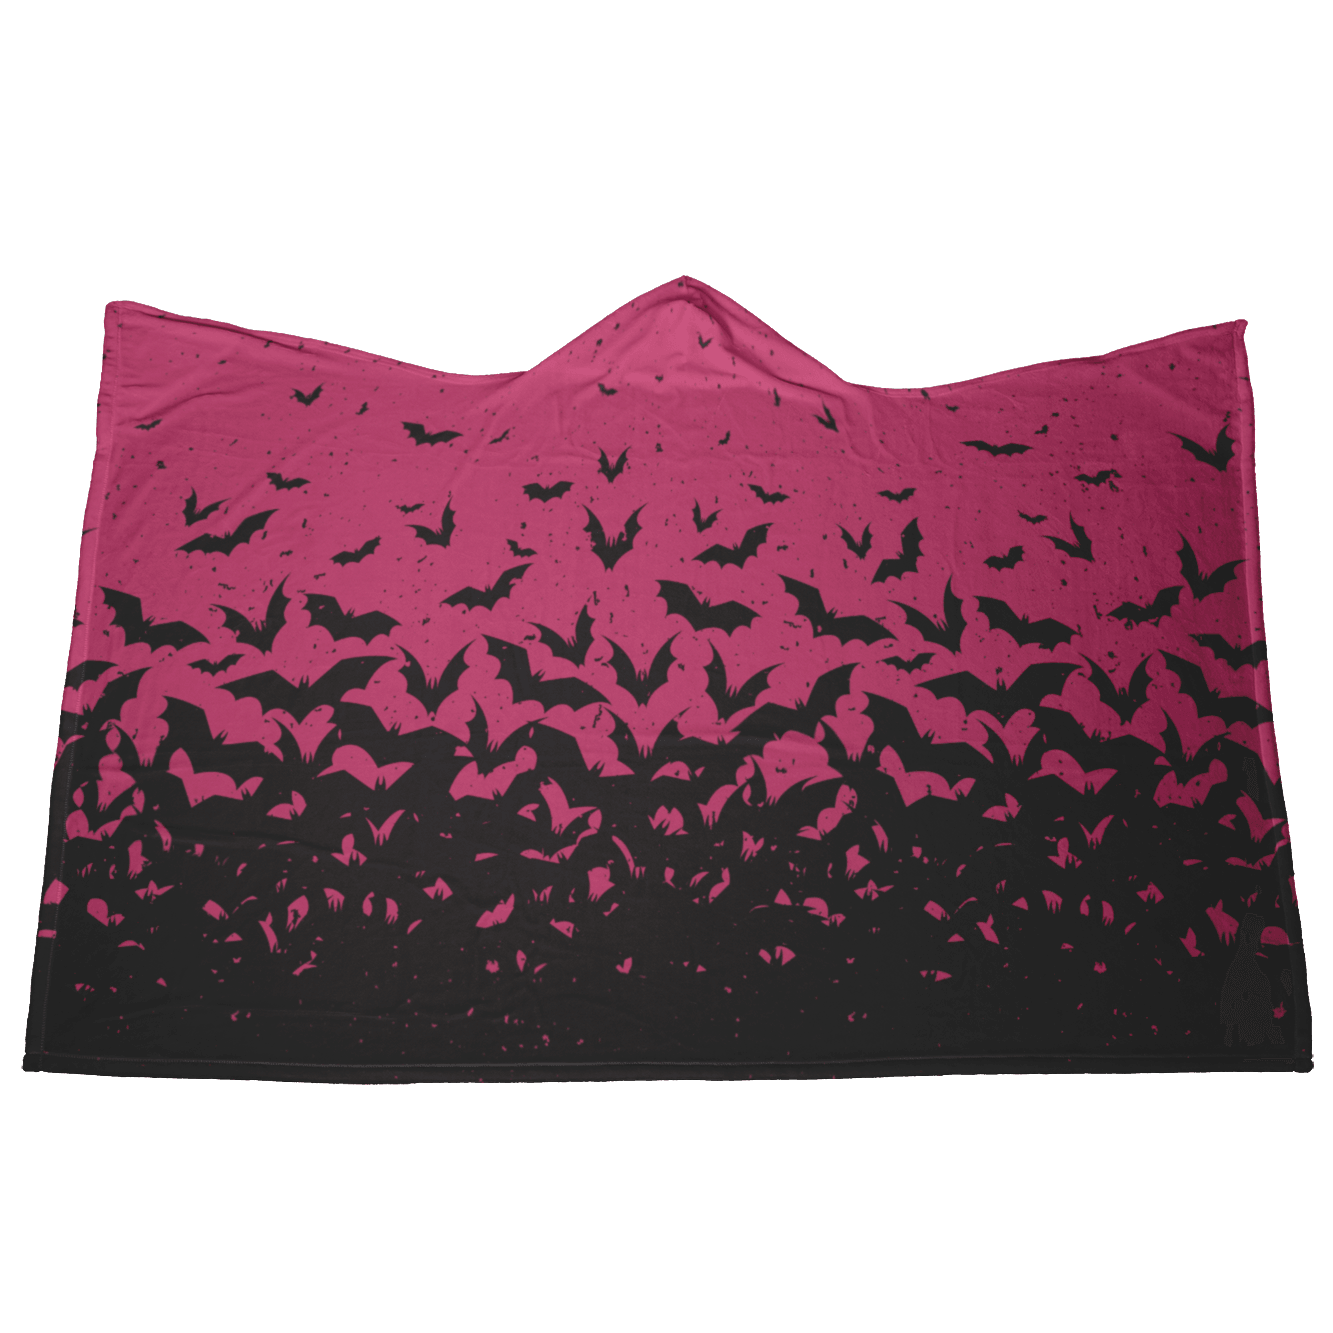 Flying Bats Hooded Blanket - Pink Hooded Blankets Fleece 